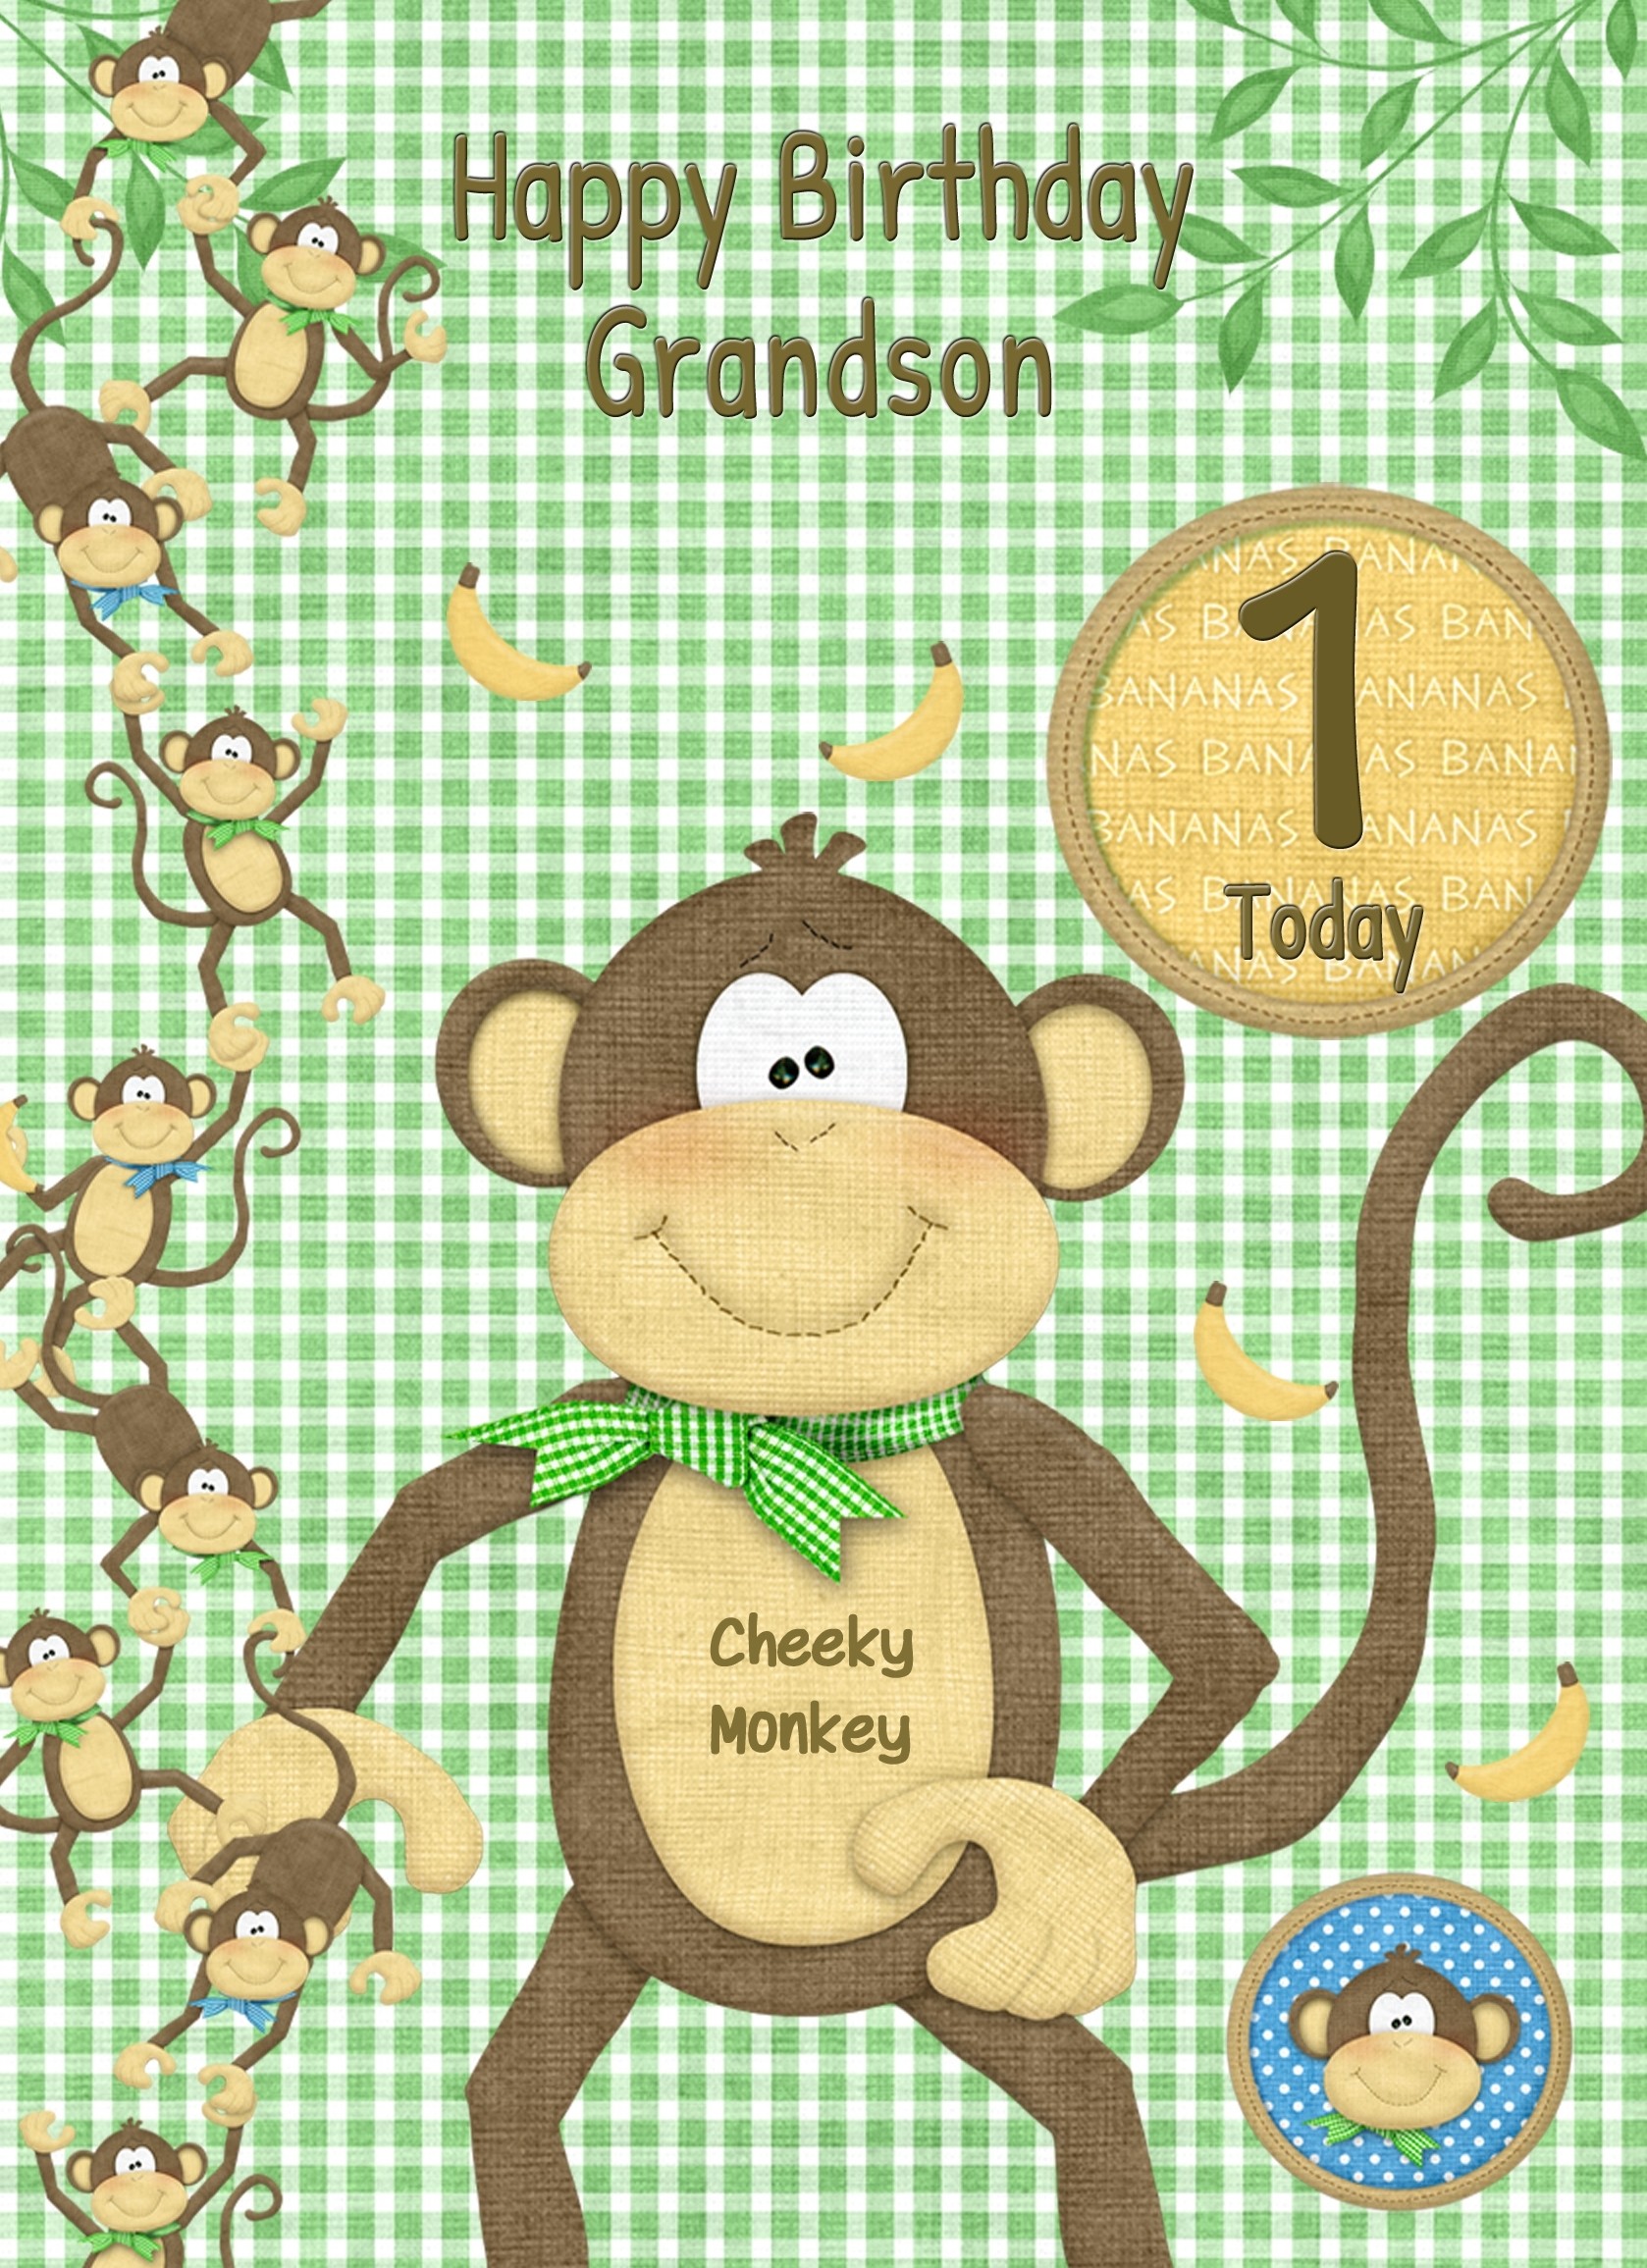 Kids 1st Birthday Cheeky Monkey Cartoon Card for Grandson